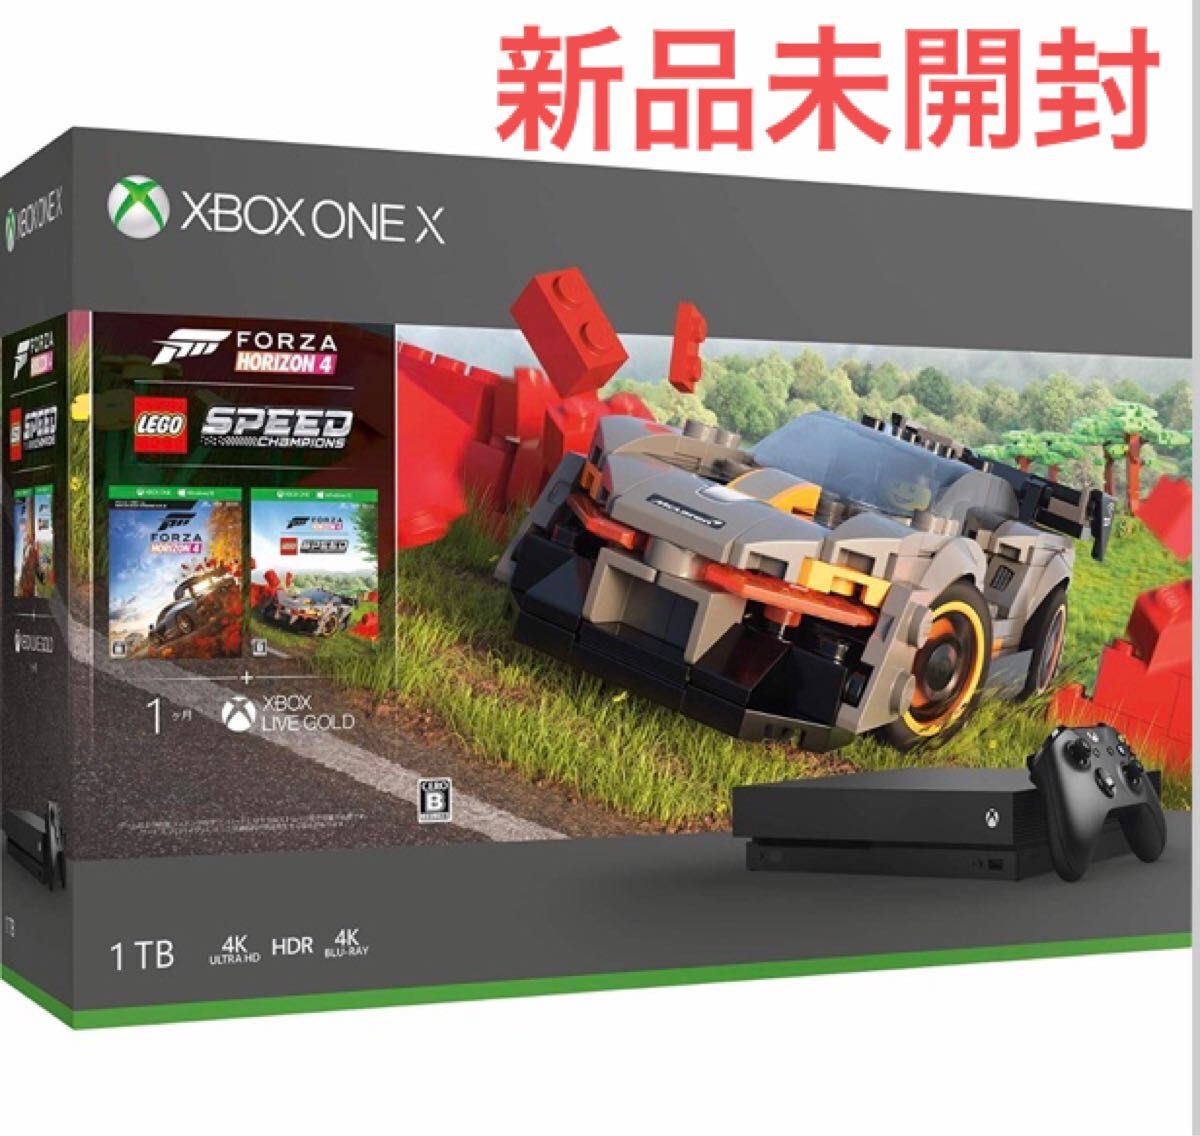 XboxOne X本体 1TB (Forza Horizon 4/Forza Horizon 4 LEGO 同梱版)新品未開封です